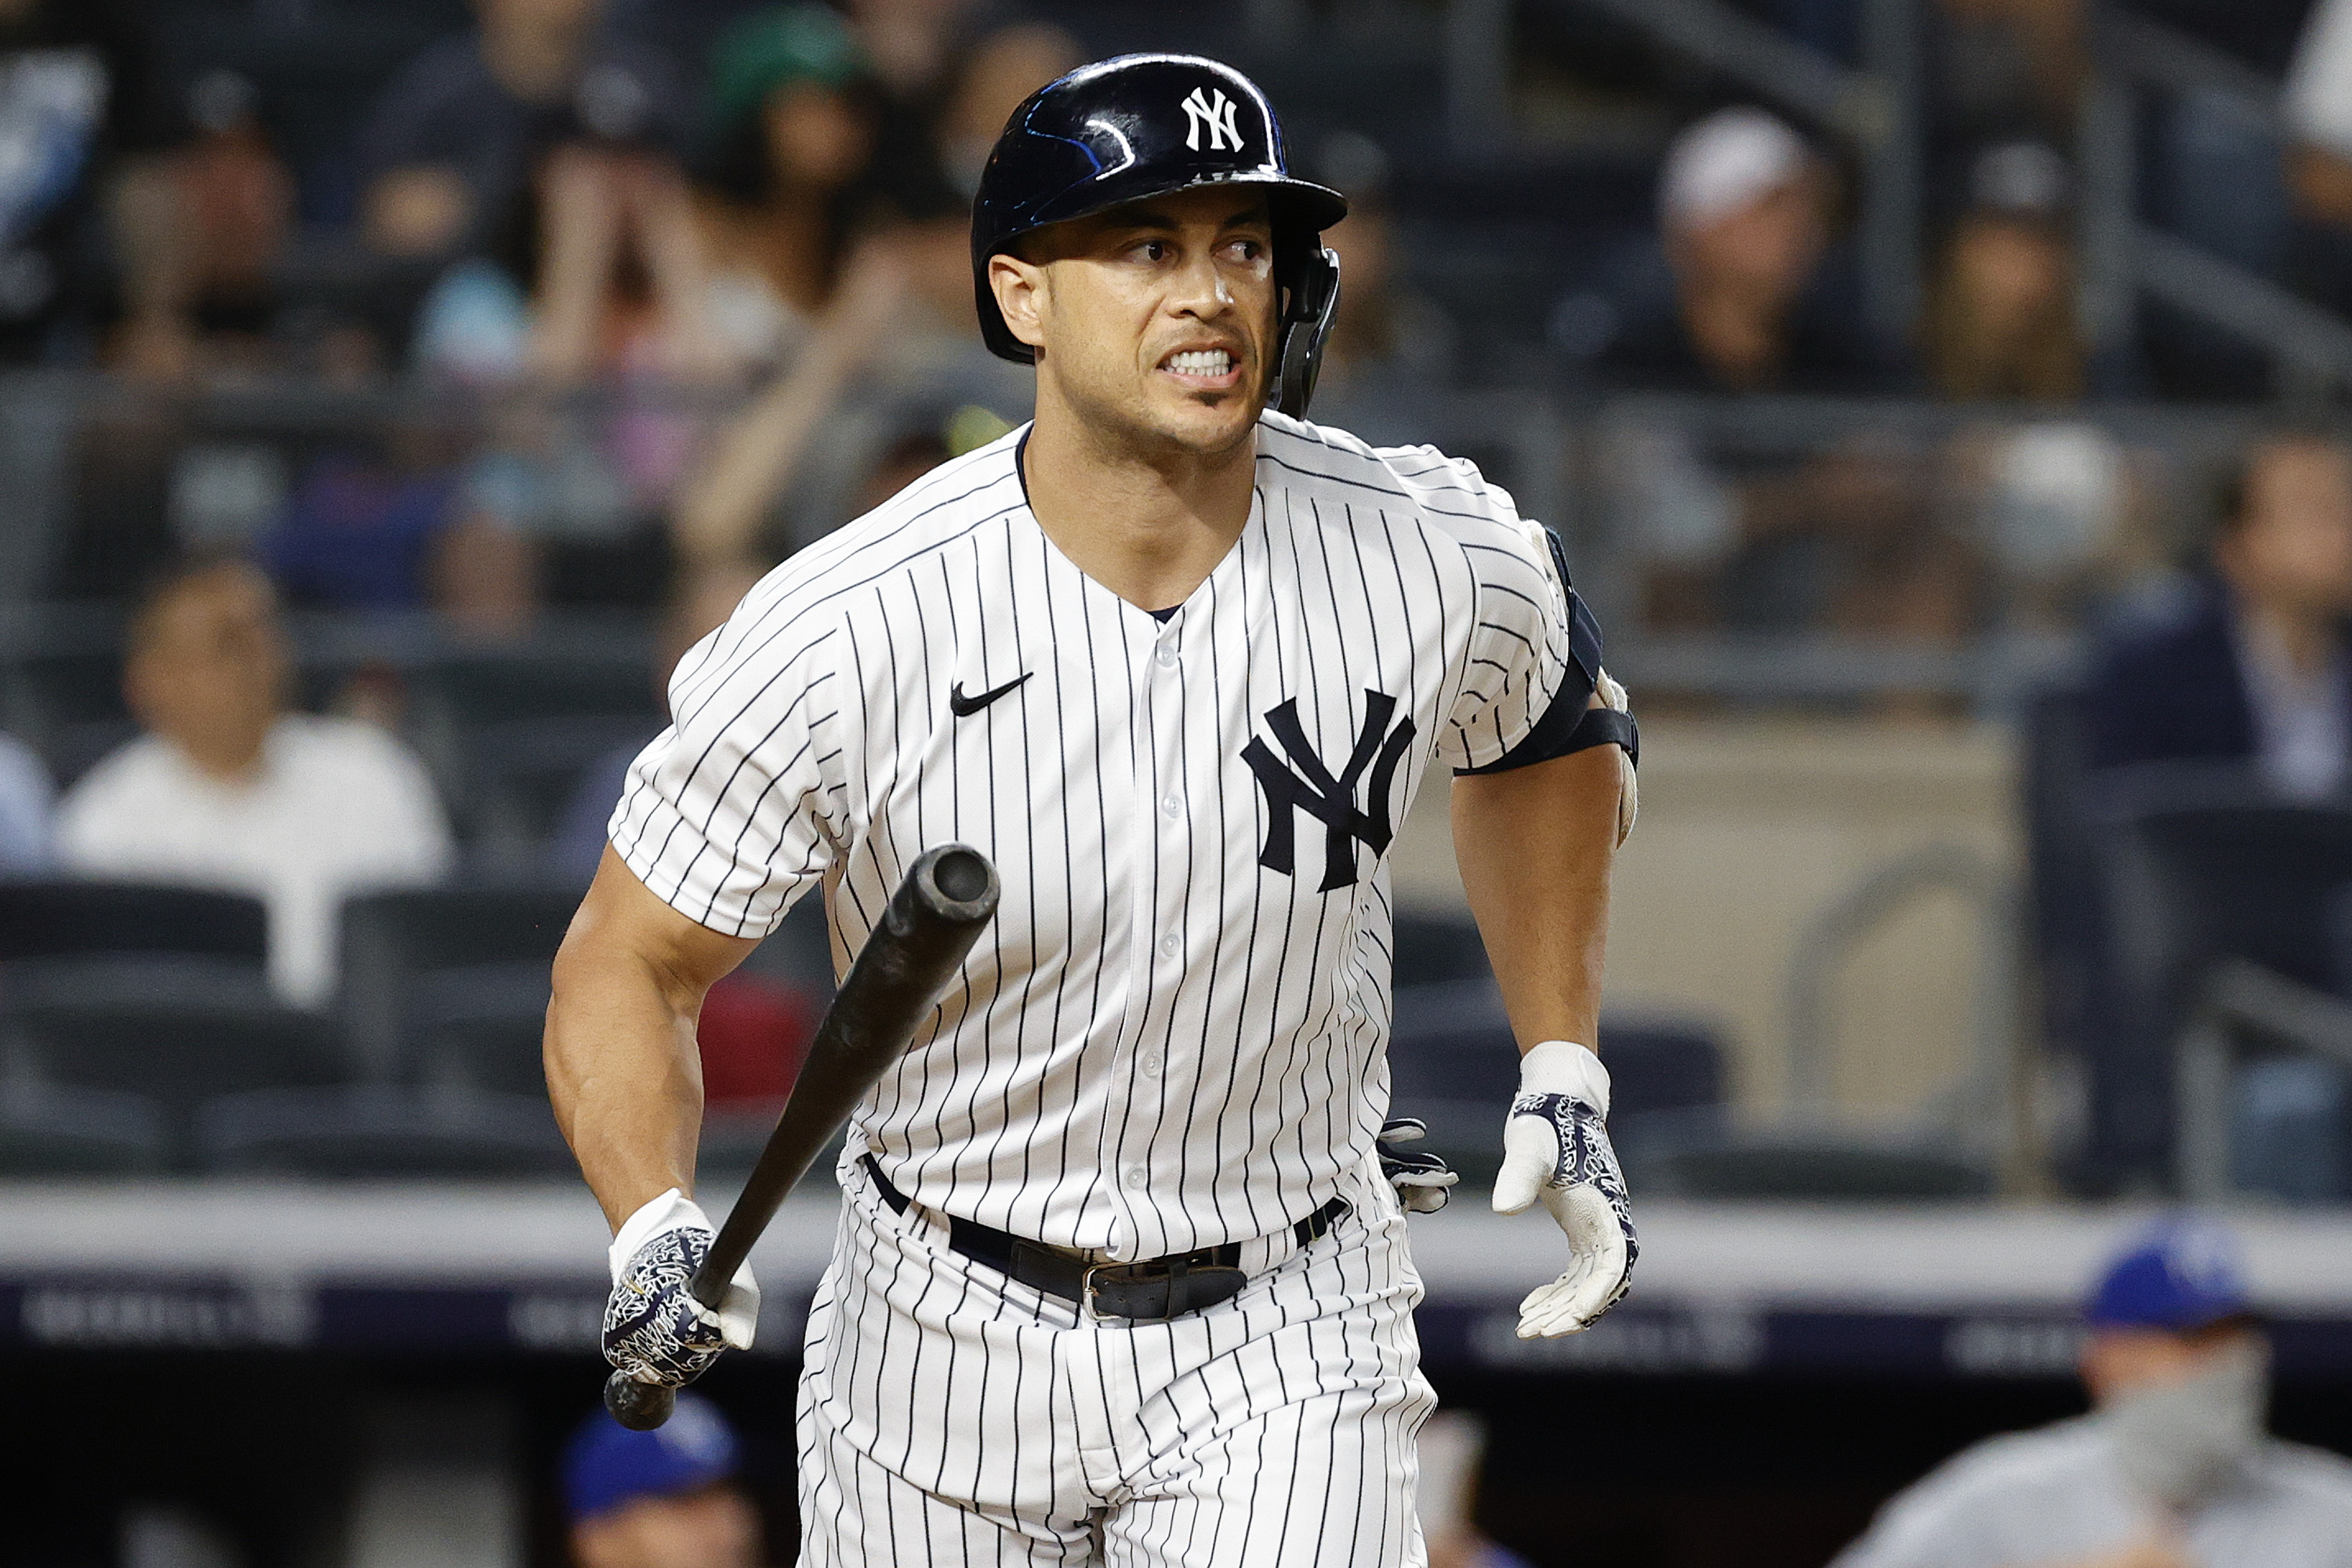 May 23, 2018: New York Yankees right fielder Giancarlo Stanton #27